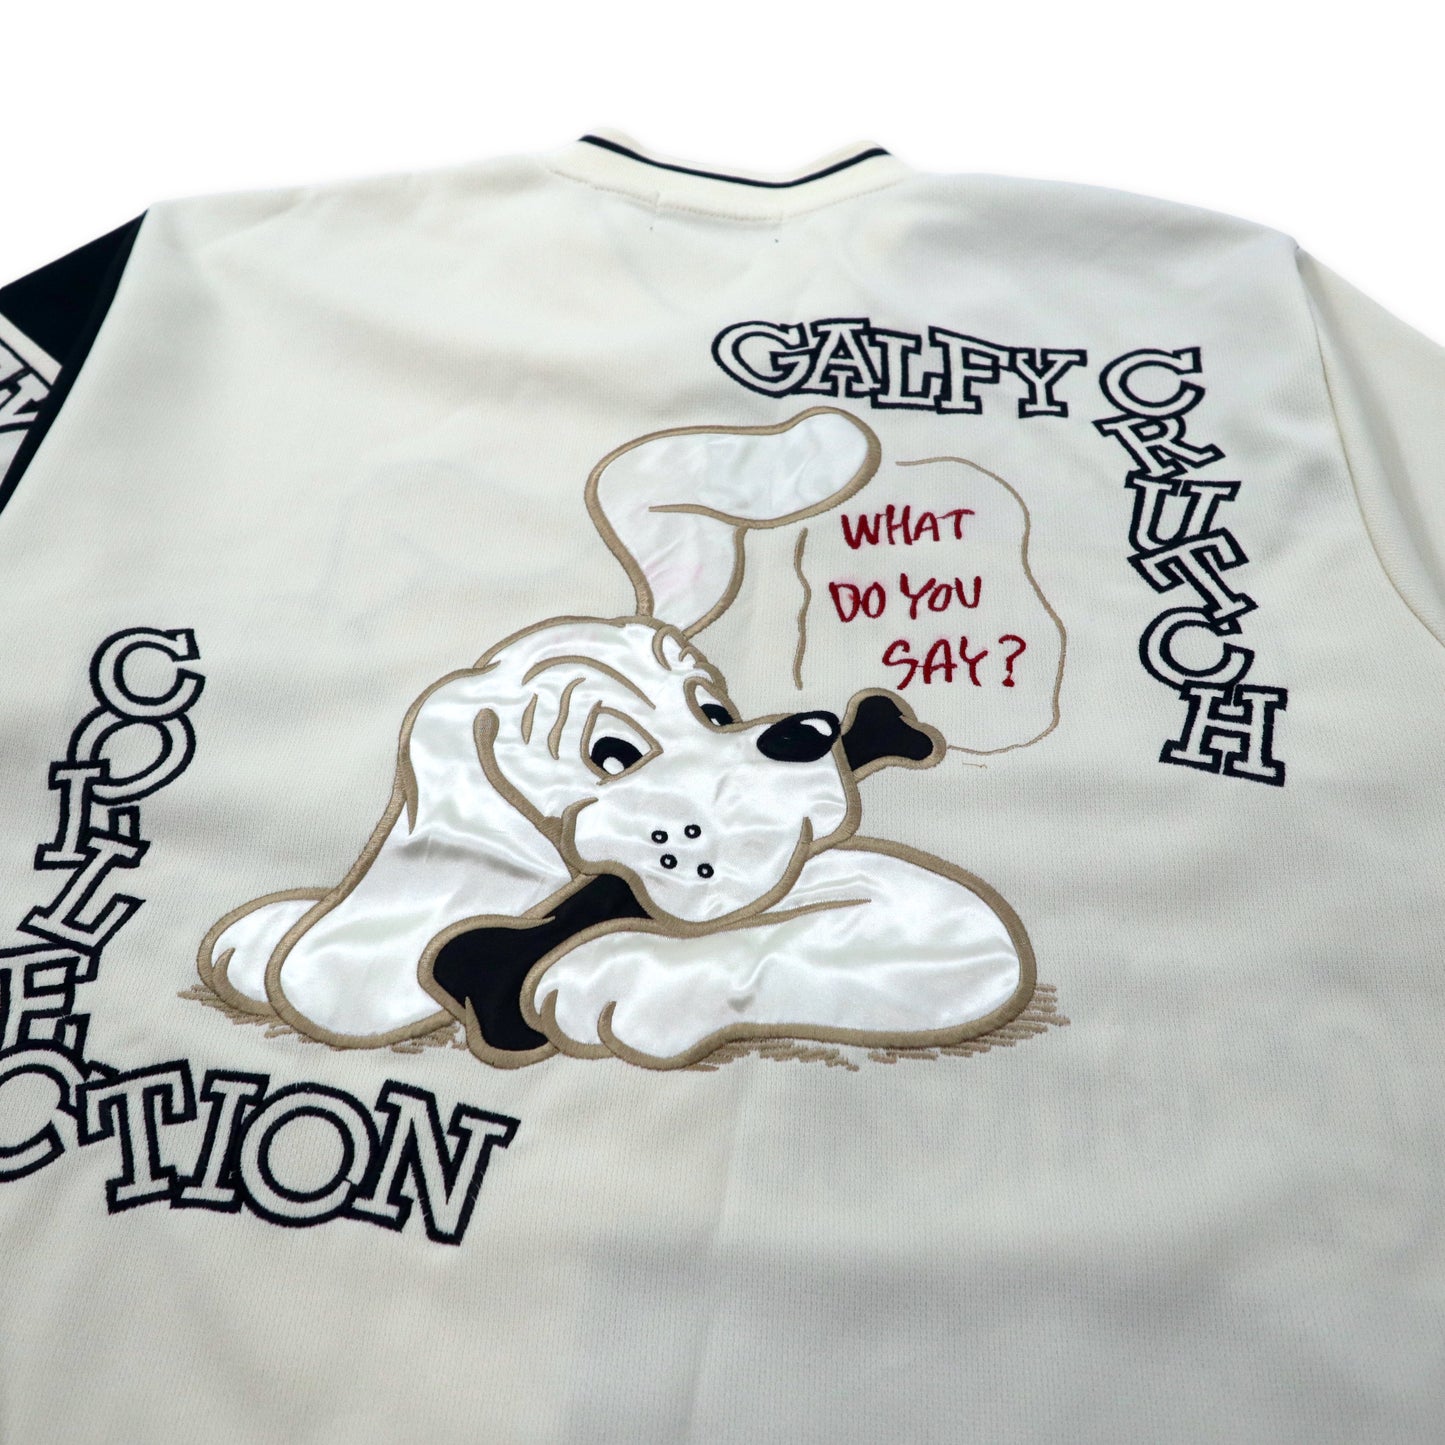 CRUTCH ( GALFY ) ガルフィー 90年代 セットアップ ジャージ XL ホワイト ポリエステル 犬 キャラクター刺繍 ビッグサイズ